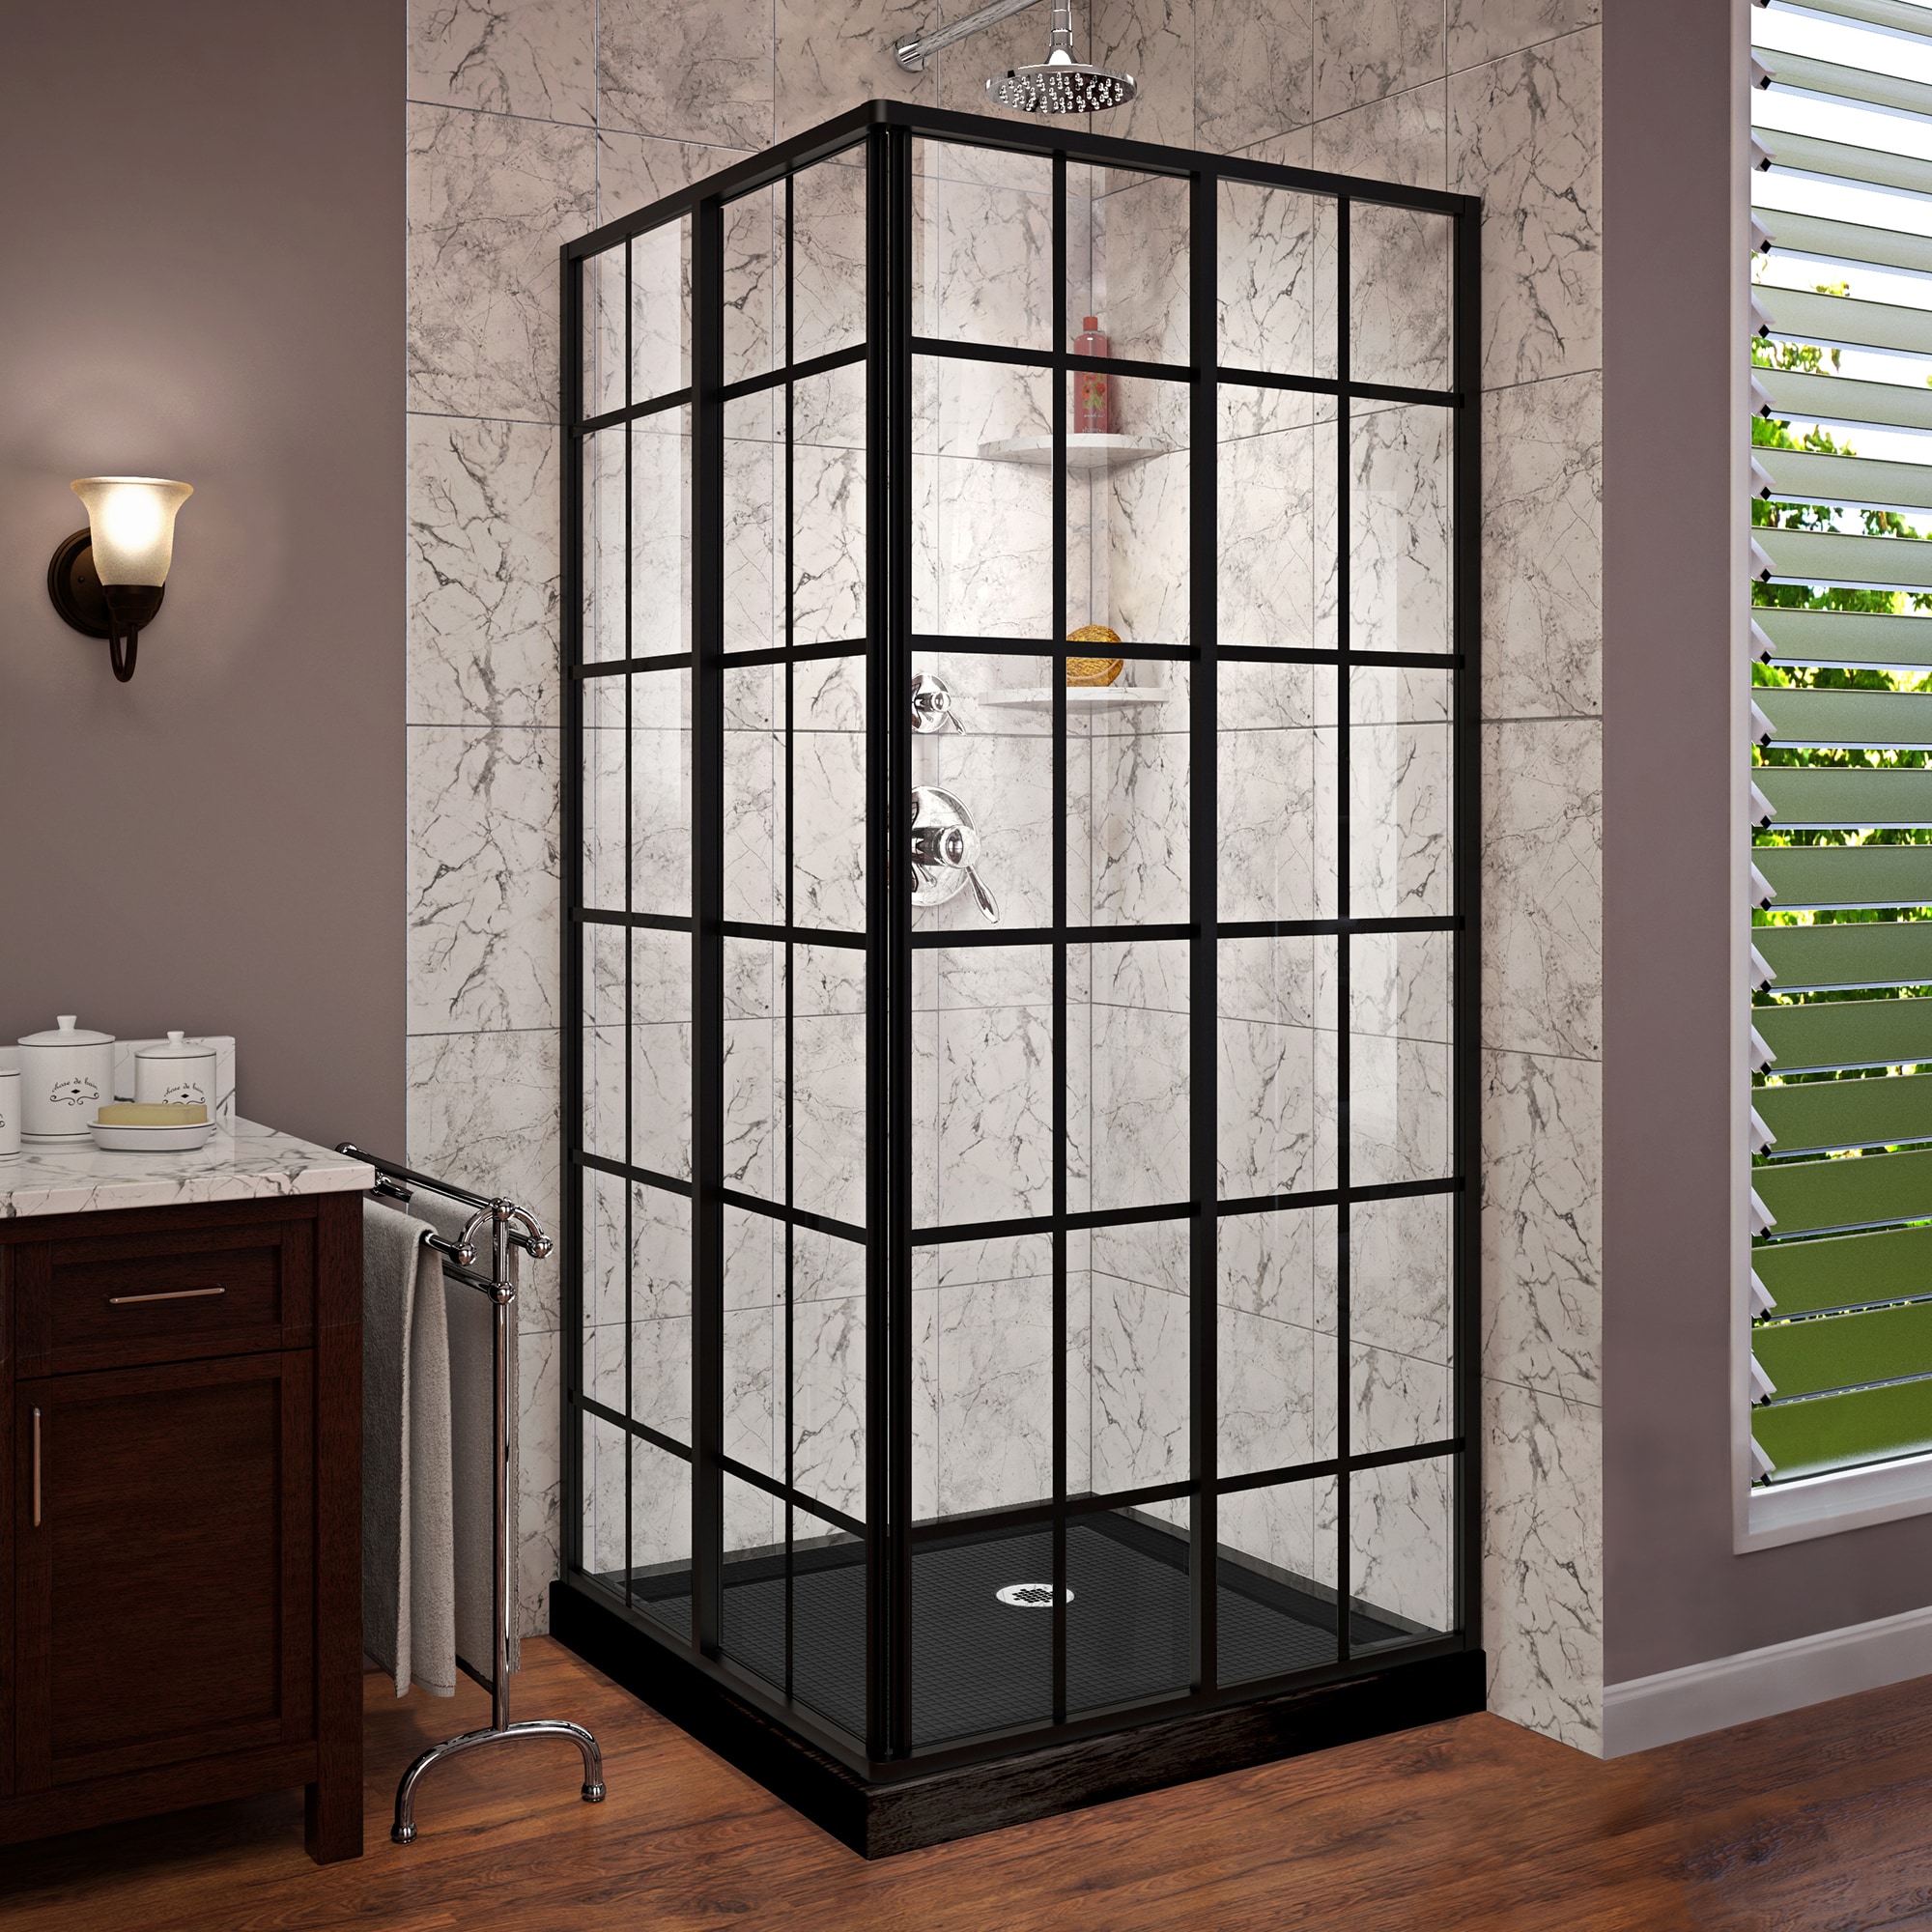 DreamLine DL-6790-09 French Corner 42 D x 42 W x 74 3/4 H Framed Sliding Shower Enclosure in Satin Black and Black Acrylic Base